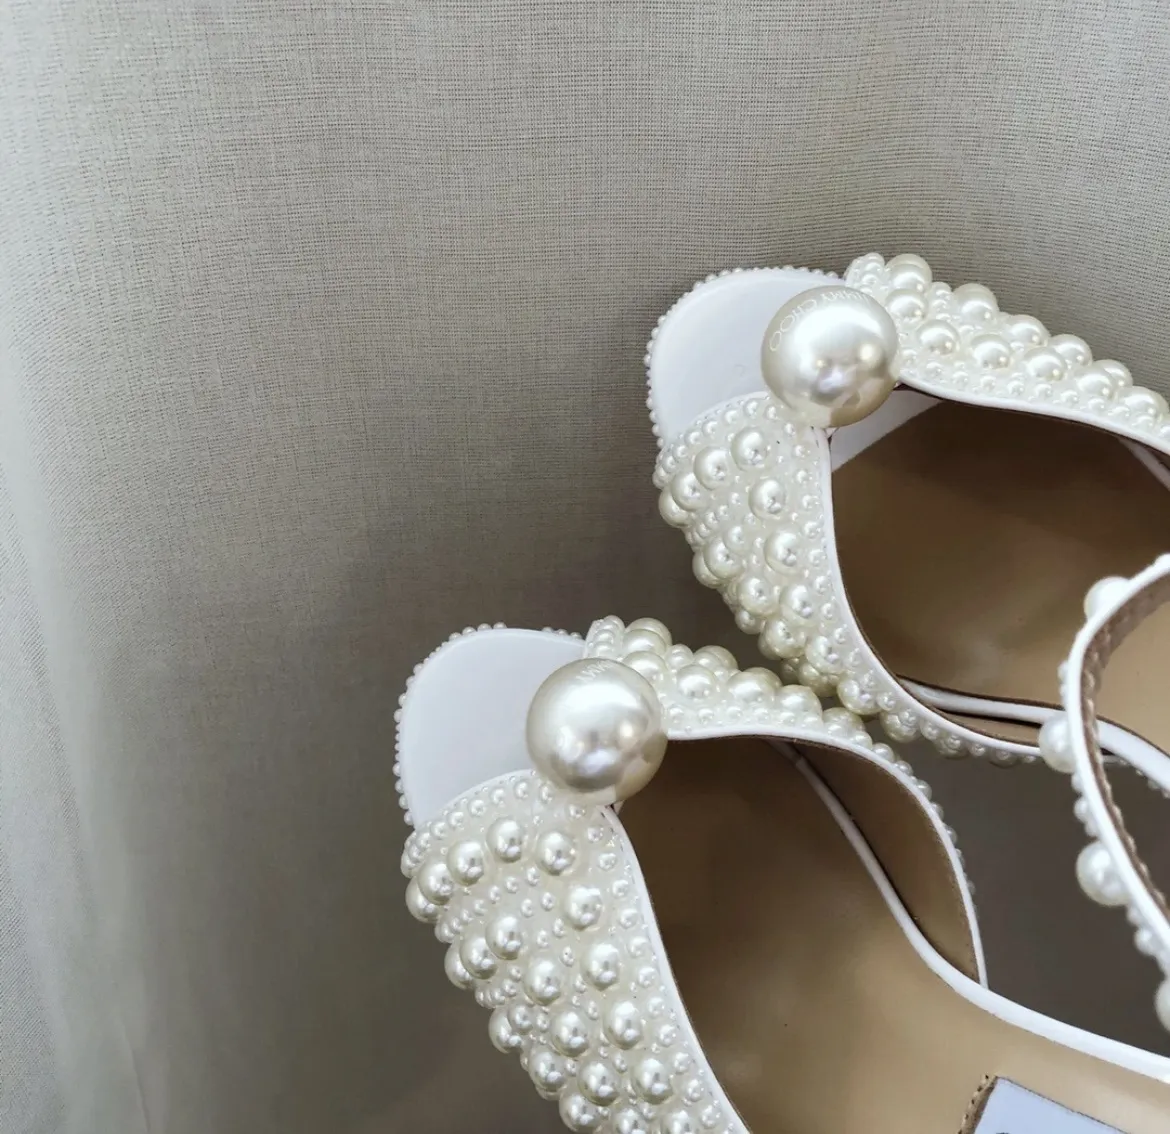 Elegant Bridal Wedding Dress Shoes Sacora Lady Sandals White Pearls Leather Luxury Brands High Heels Women Walking Party Siz